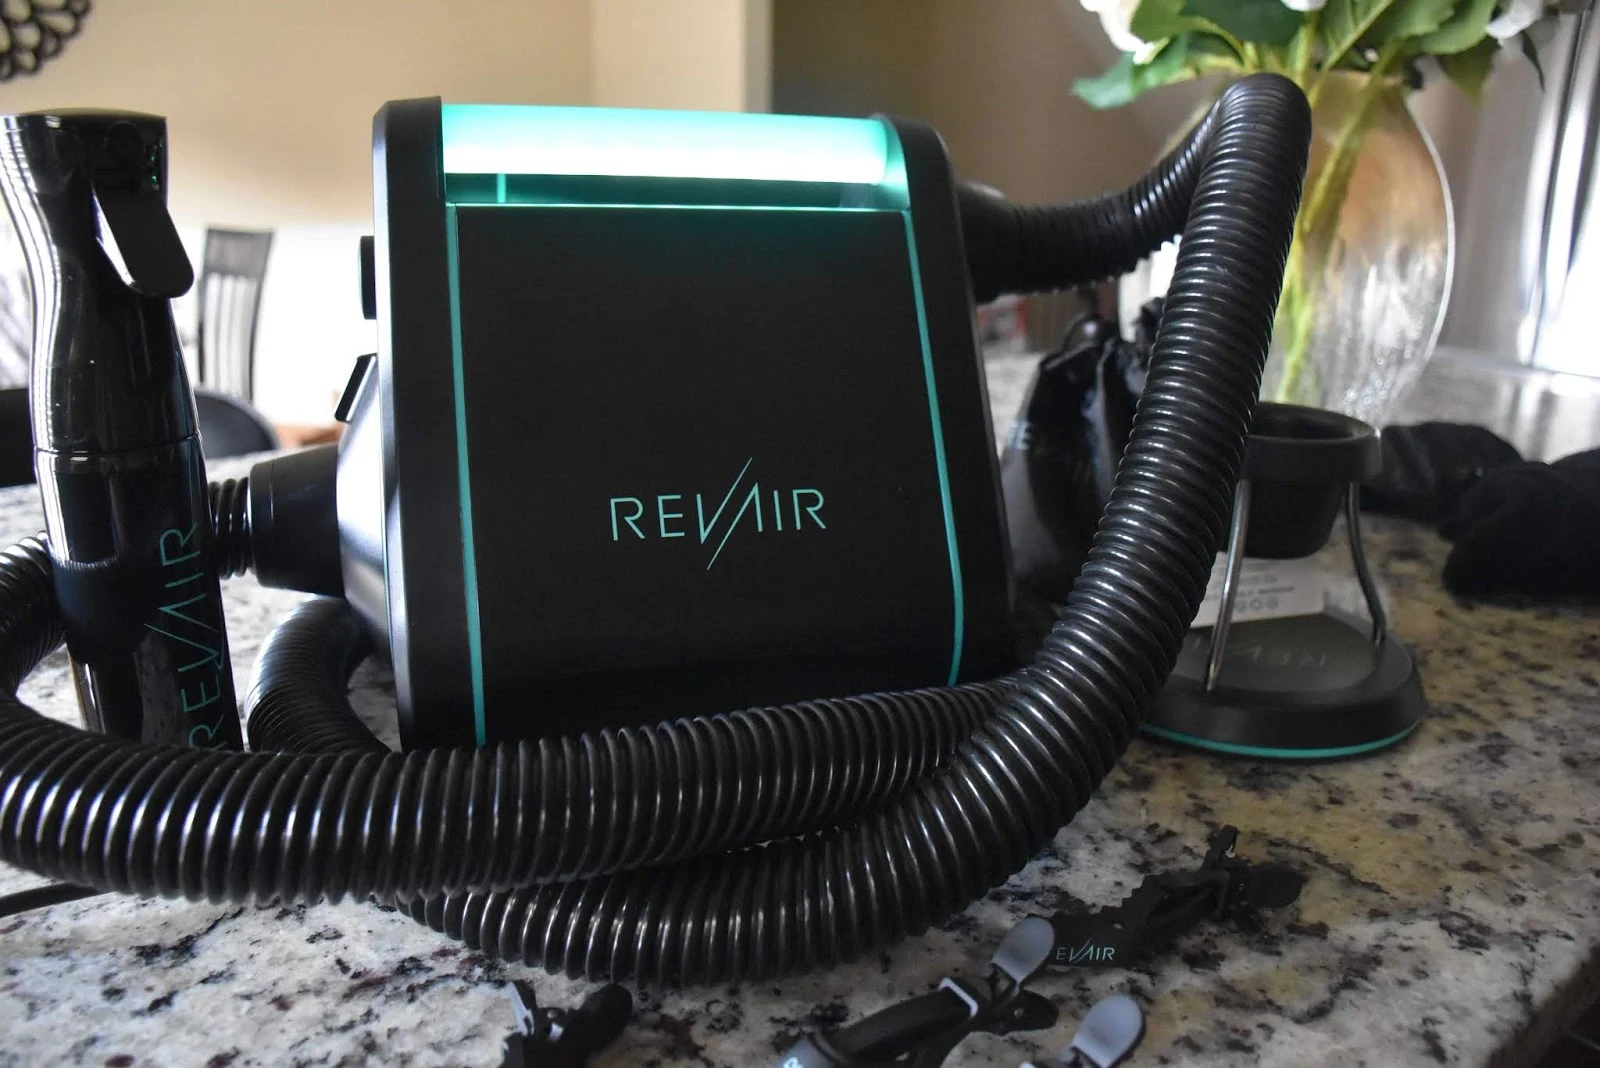 Video: Does RevAir Work for Black Kinky/Curly Hair? RevAir Review